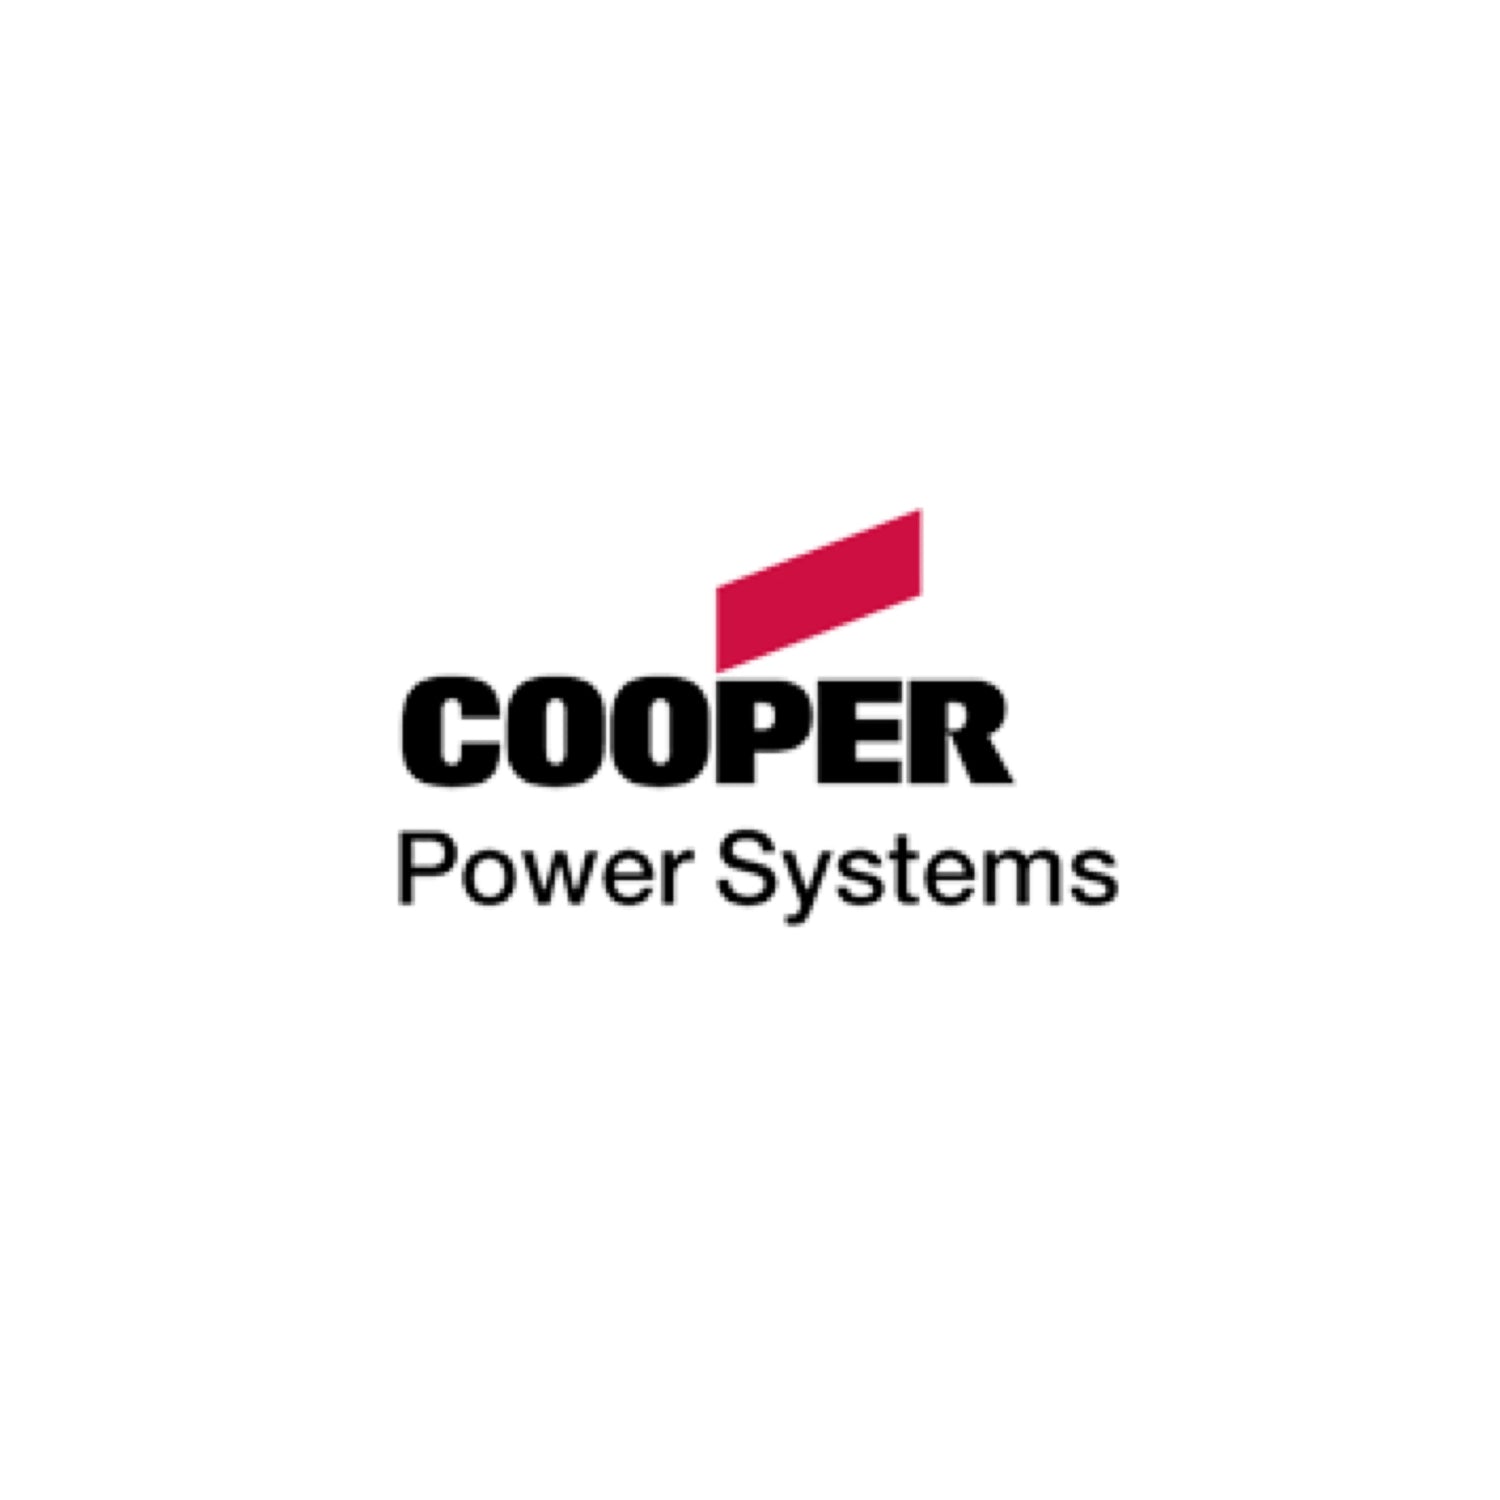 COOPER POWER SYSTEMS LLC